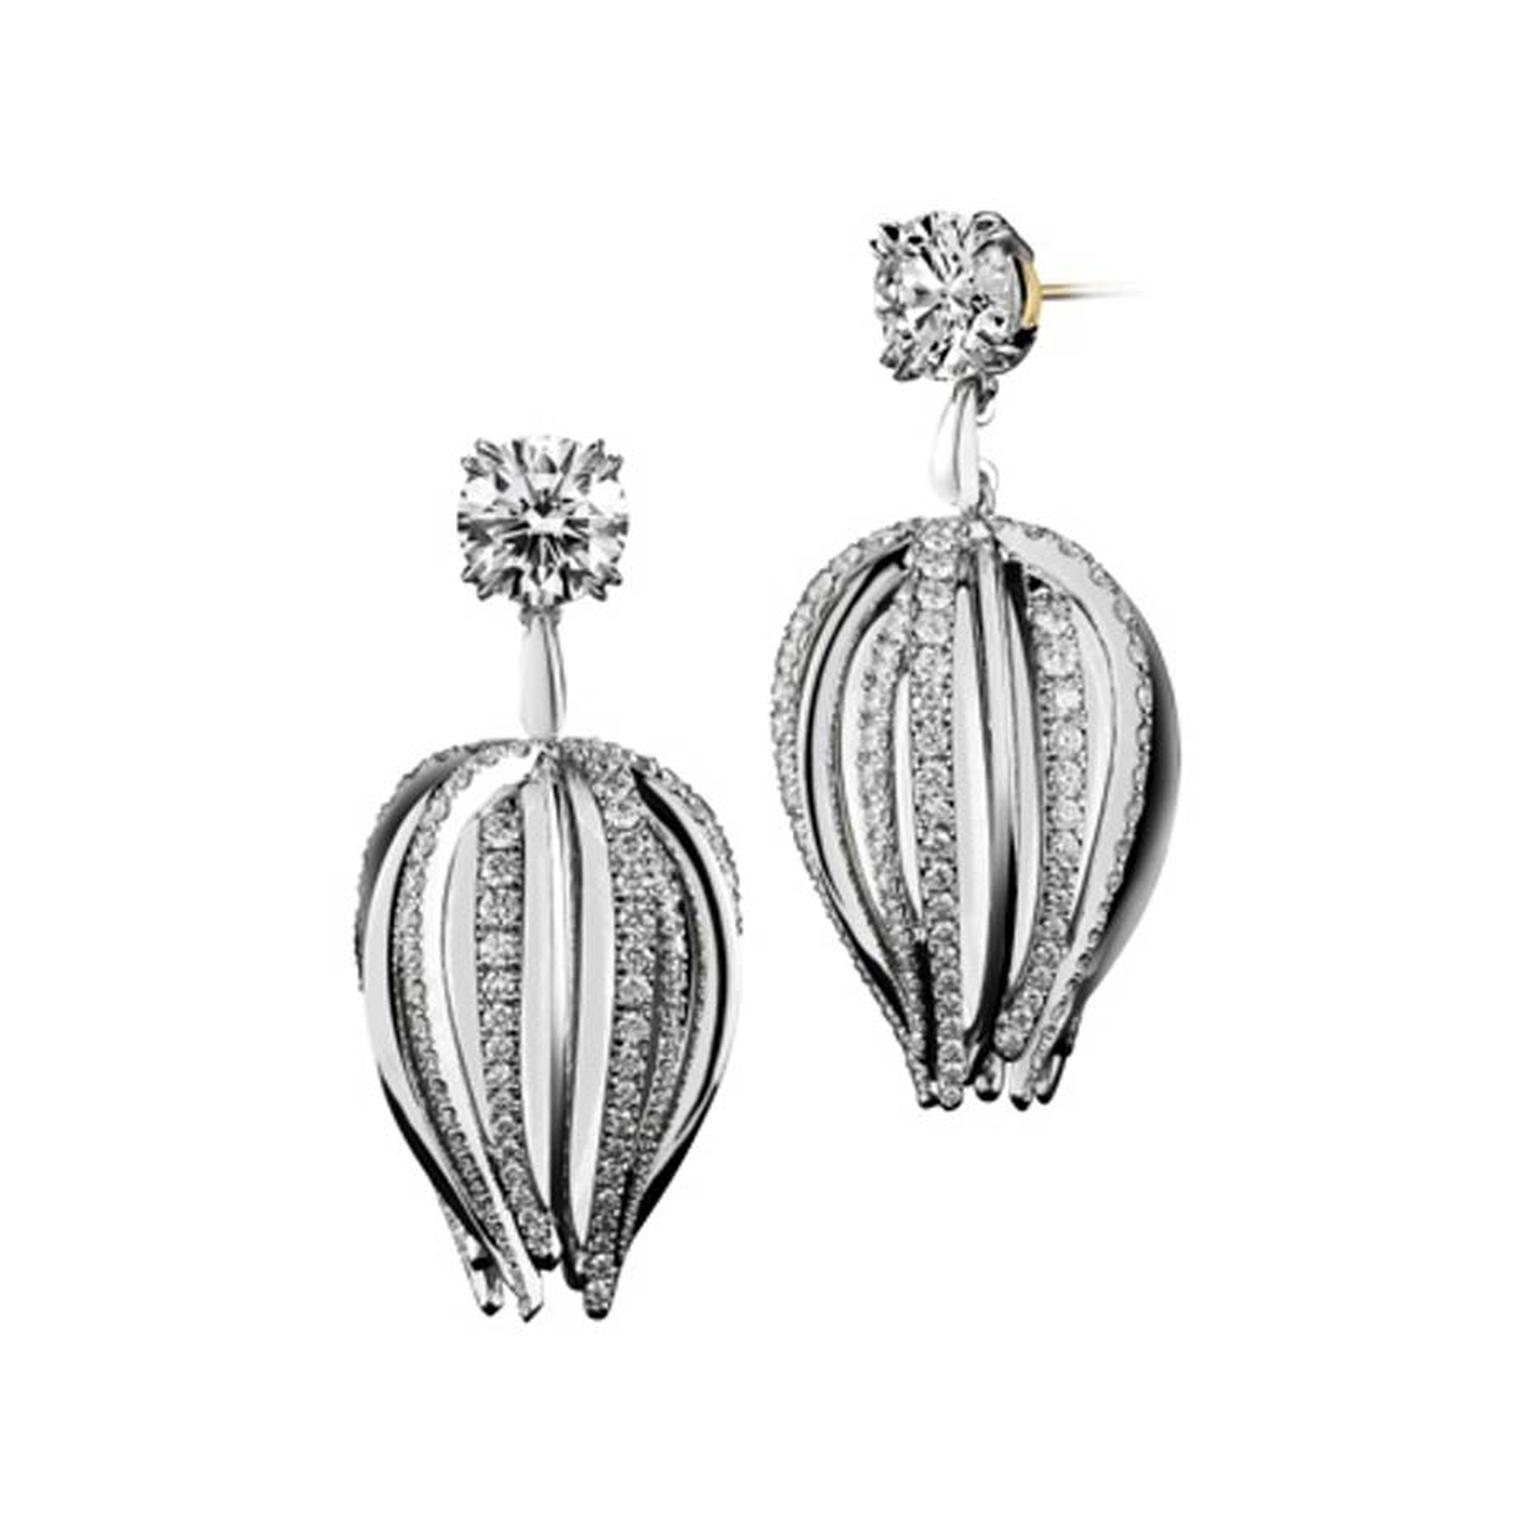 Alexandra Mor curved dangling diamond earrings set in white and black gold.